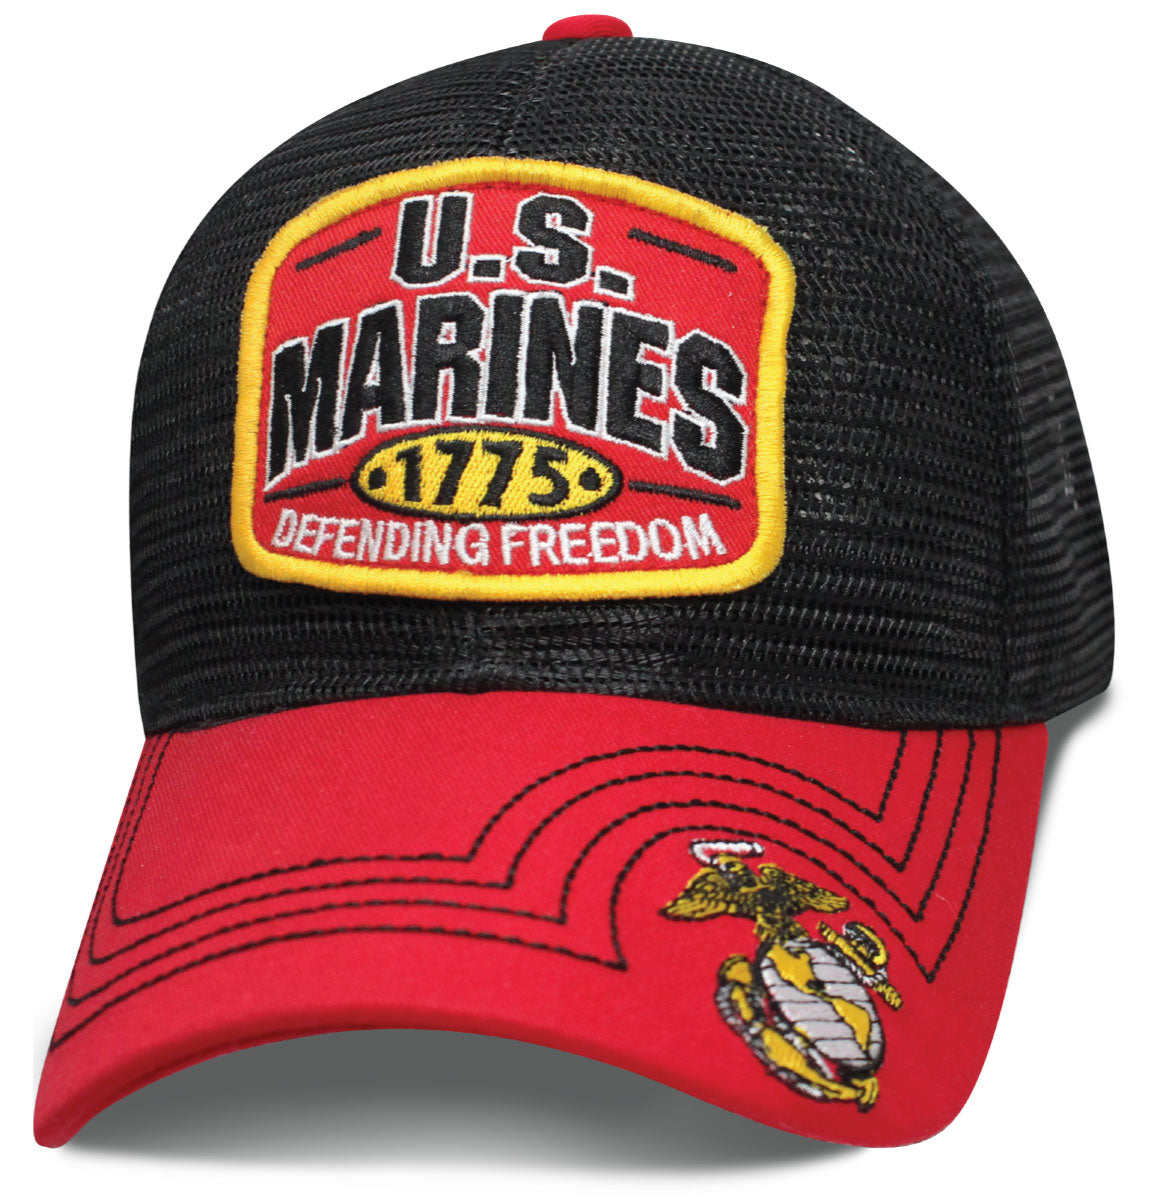 Full Mesh Jacket: Marines